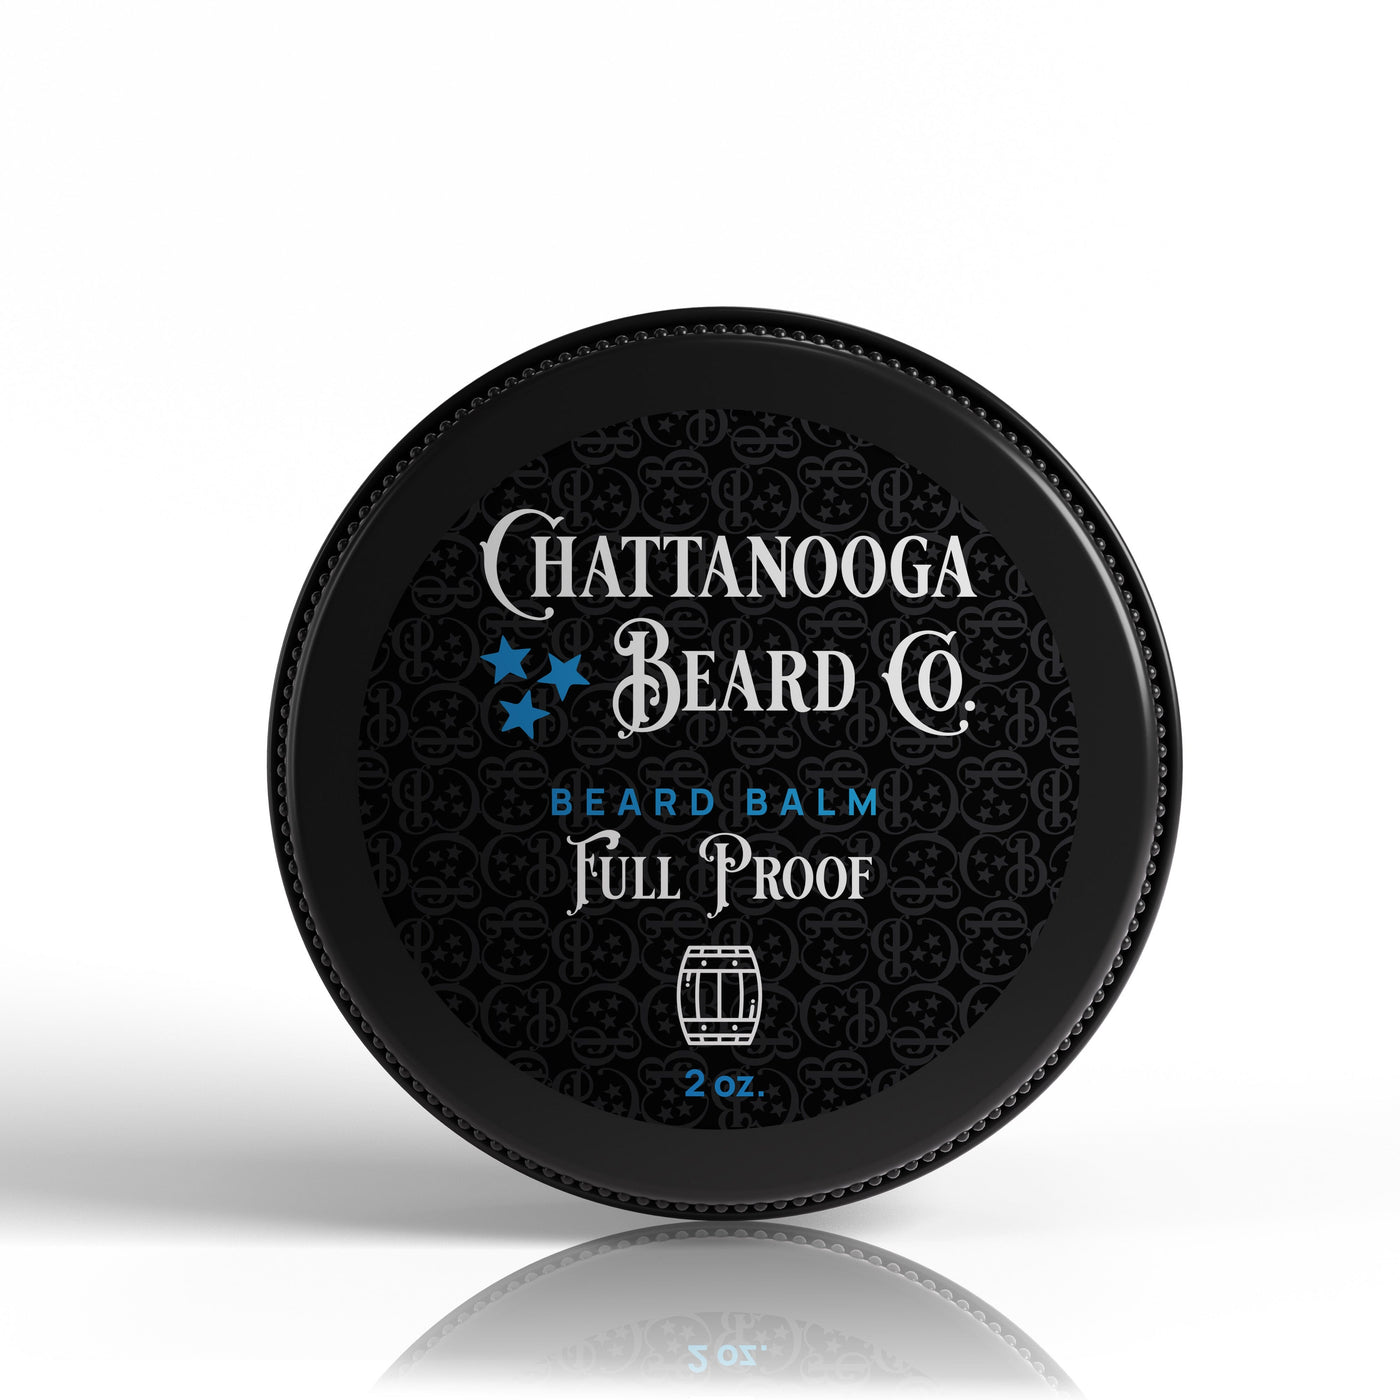 Chattanooga Beard Co. - Beard Balm Balm Chattanooga Beard Co. Full Proof 